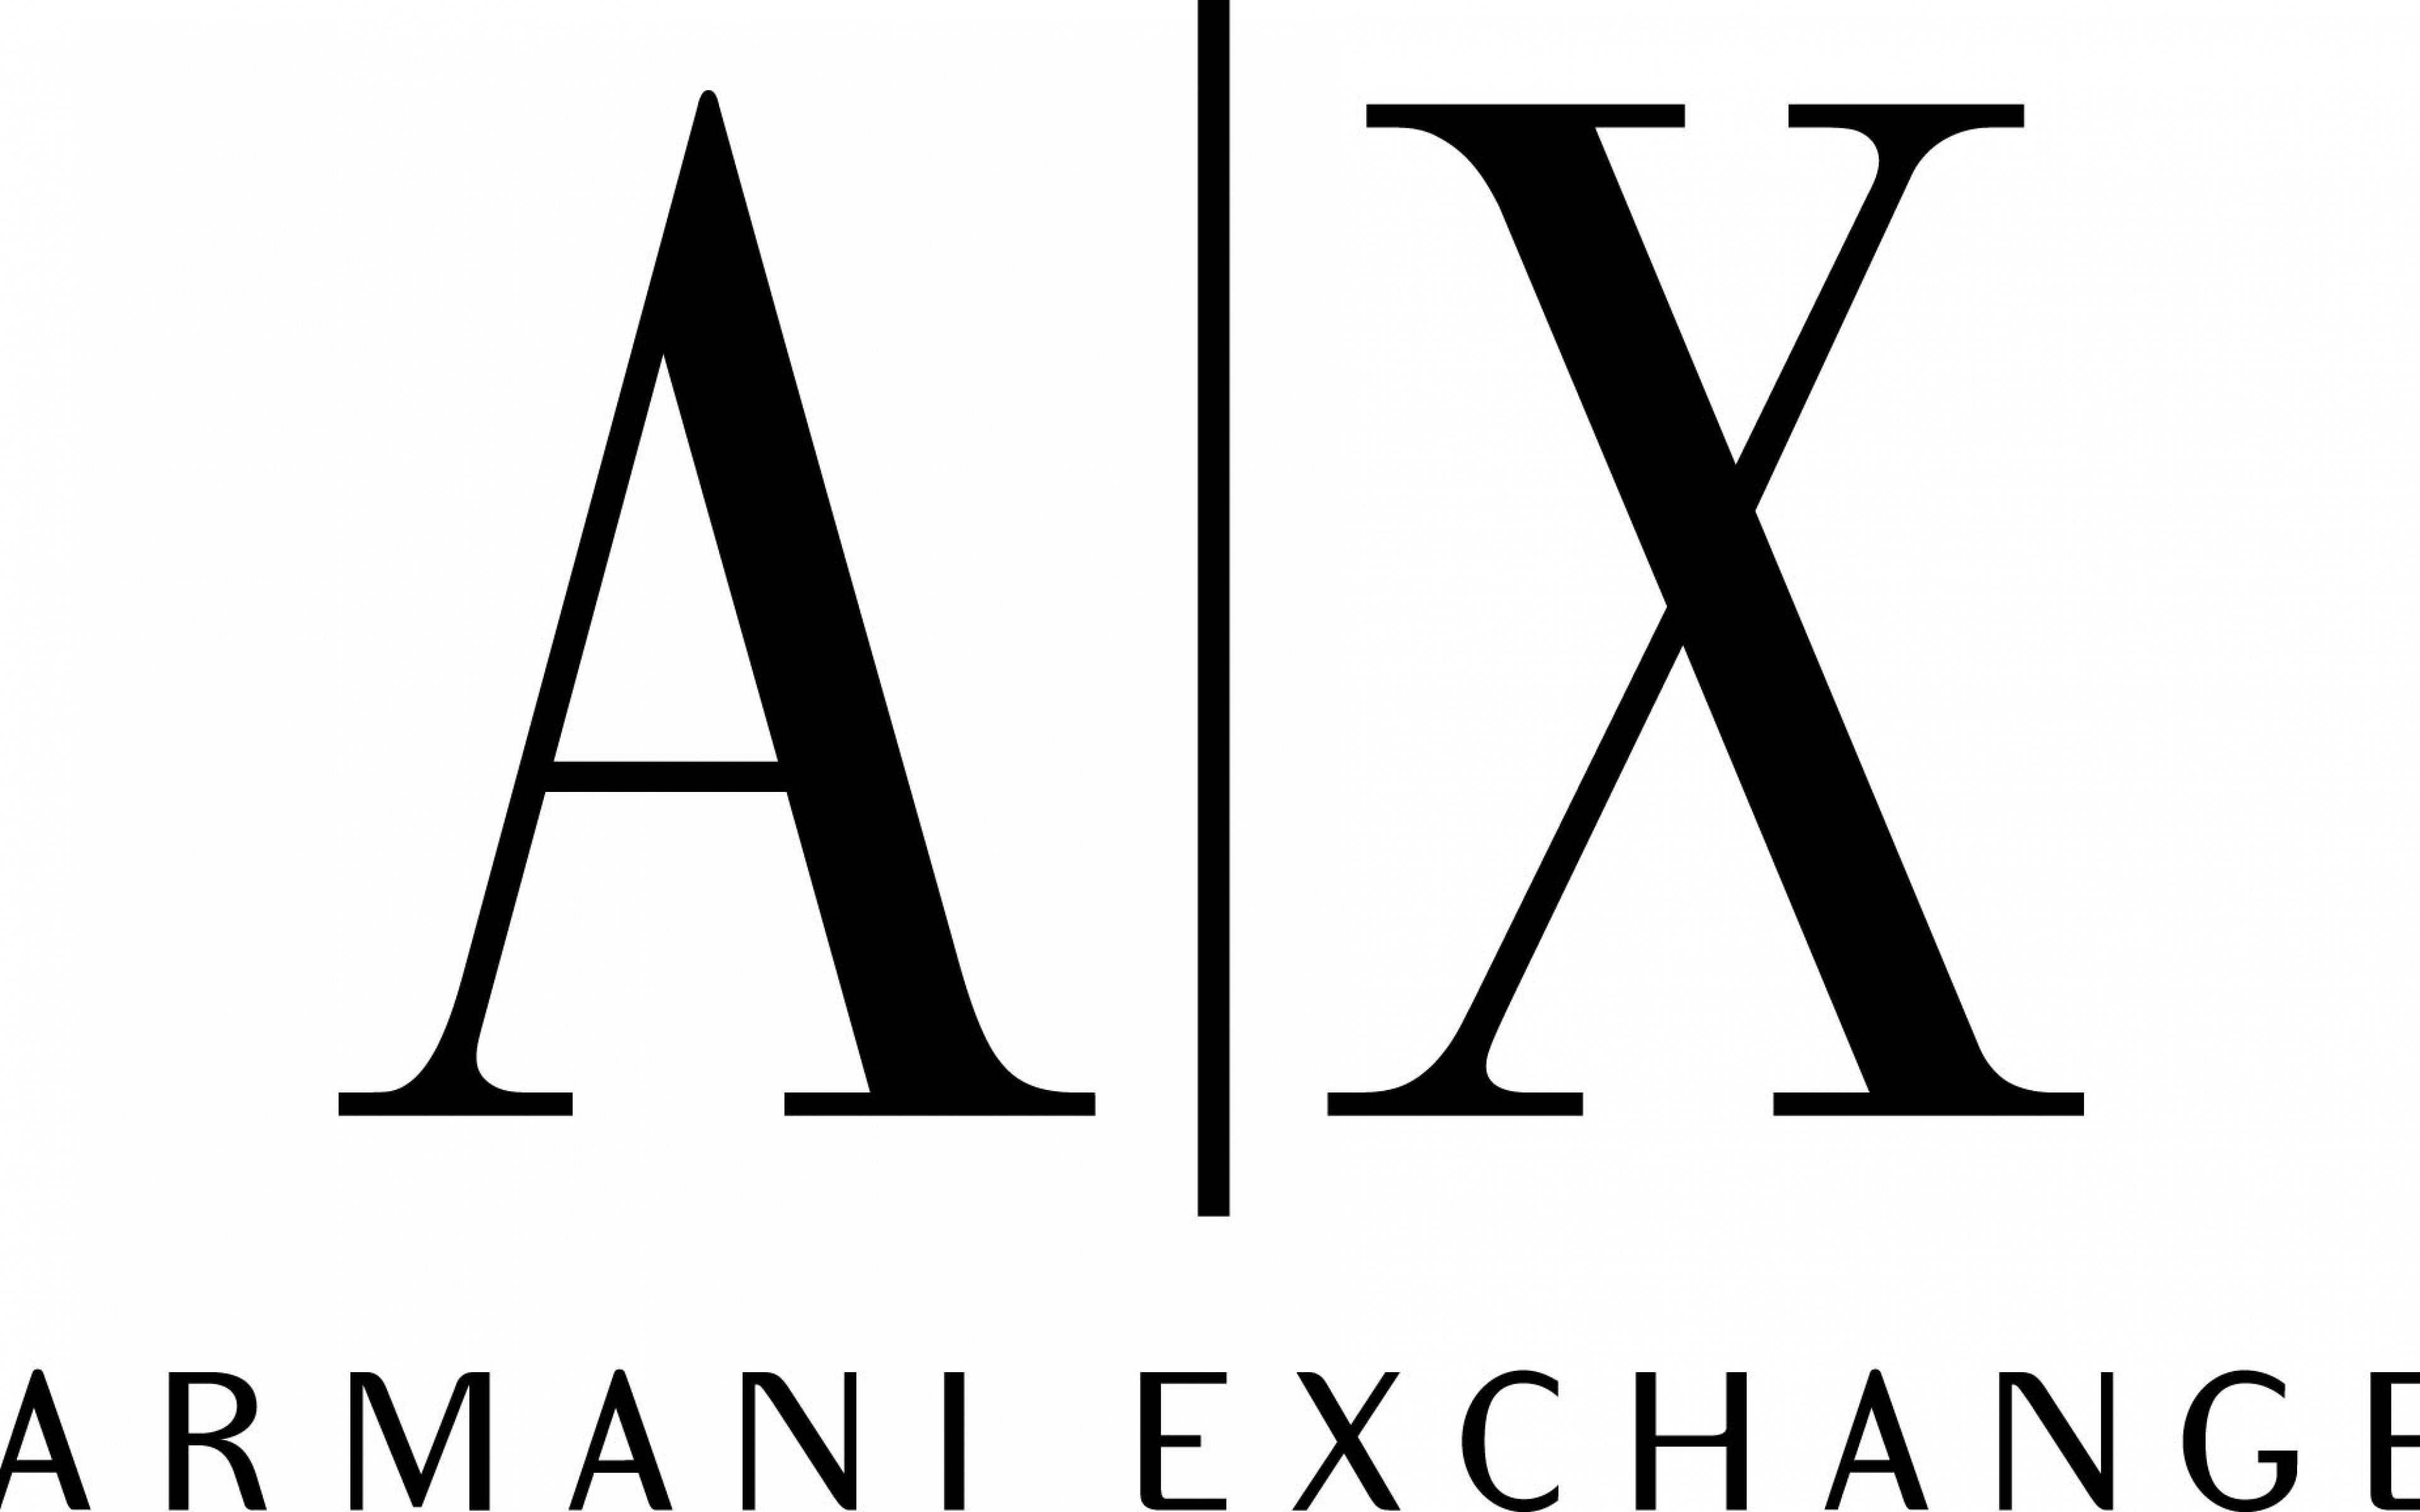 HD Armani Exchange Wallpaper - PixelsTalk.Net